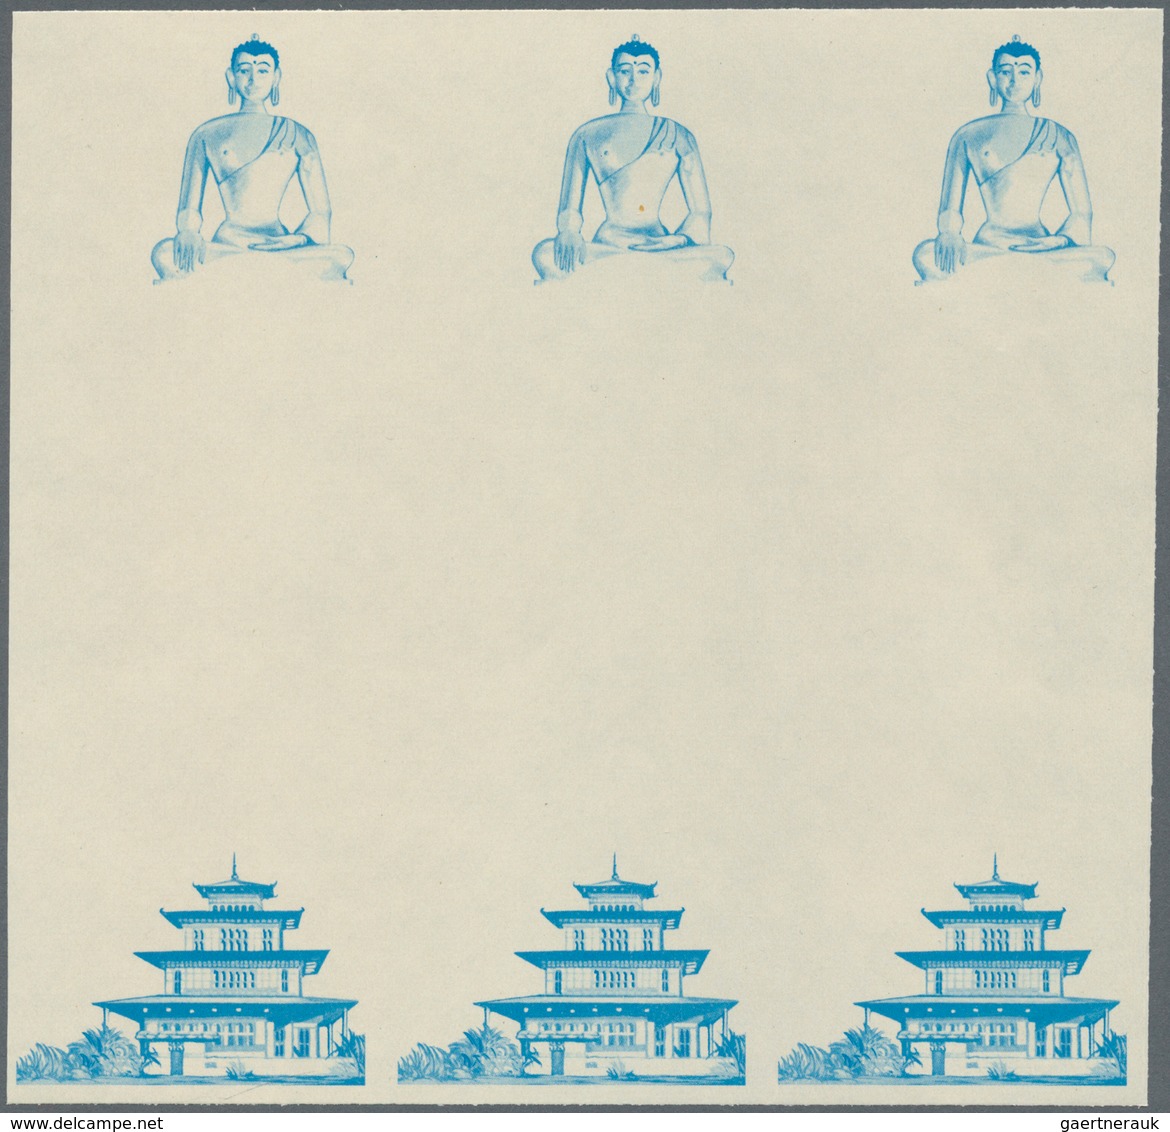 10806 Thematik: Religion / religion: 1965, Bhutan. Progressive proof (10 phases) in blocks of 3 vertical g